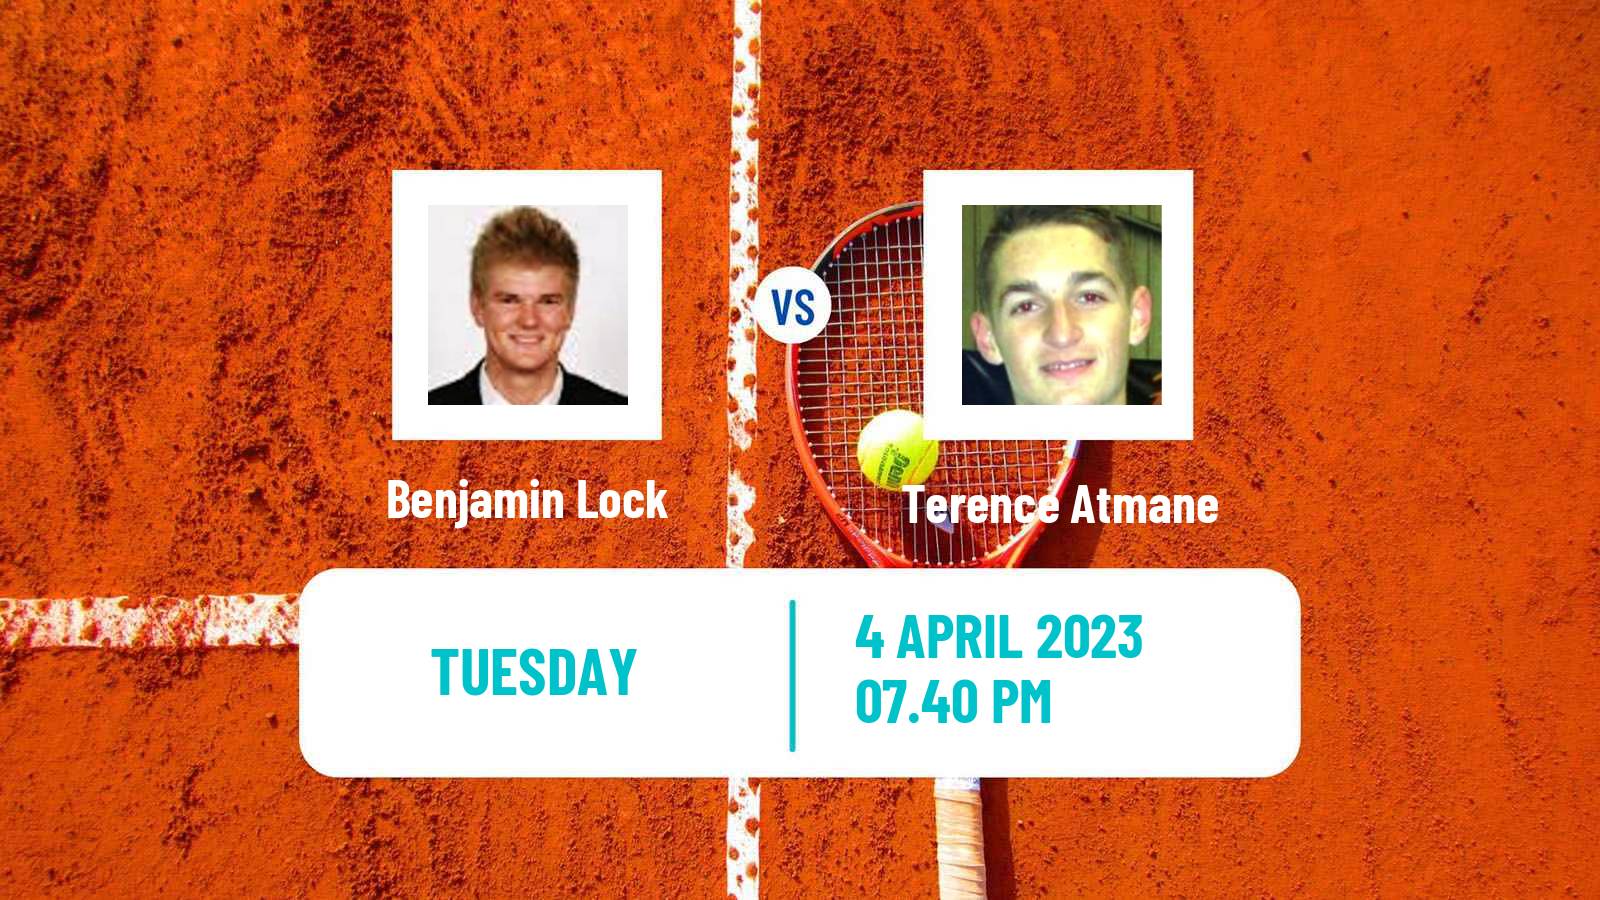 Tennis ATP Challenger Benjamin Lock - Terence Atmane